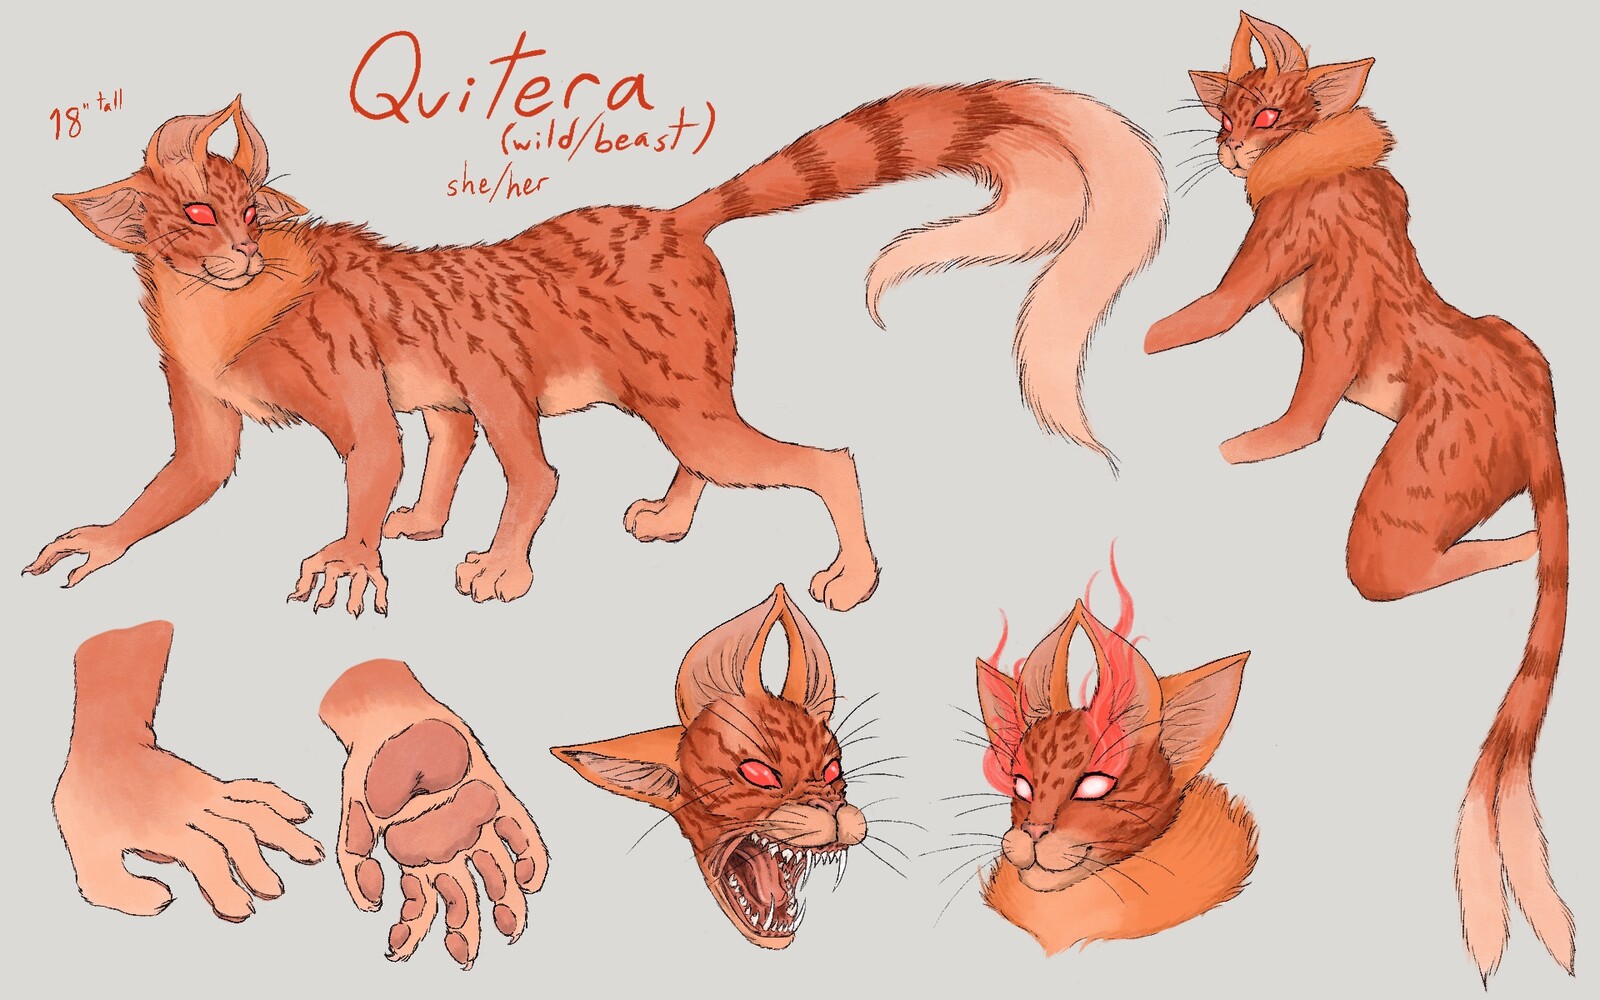 Quitera - the Beast